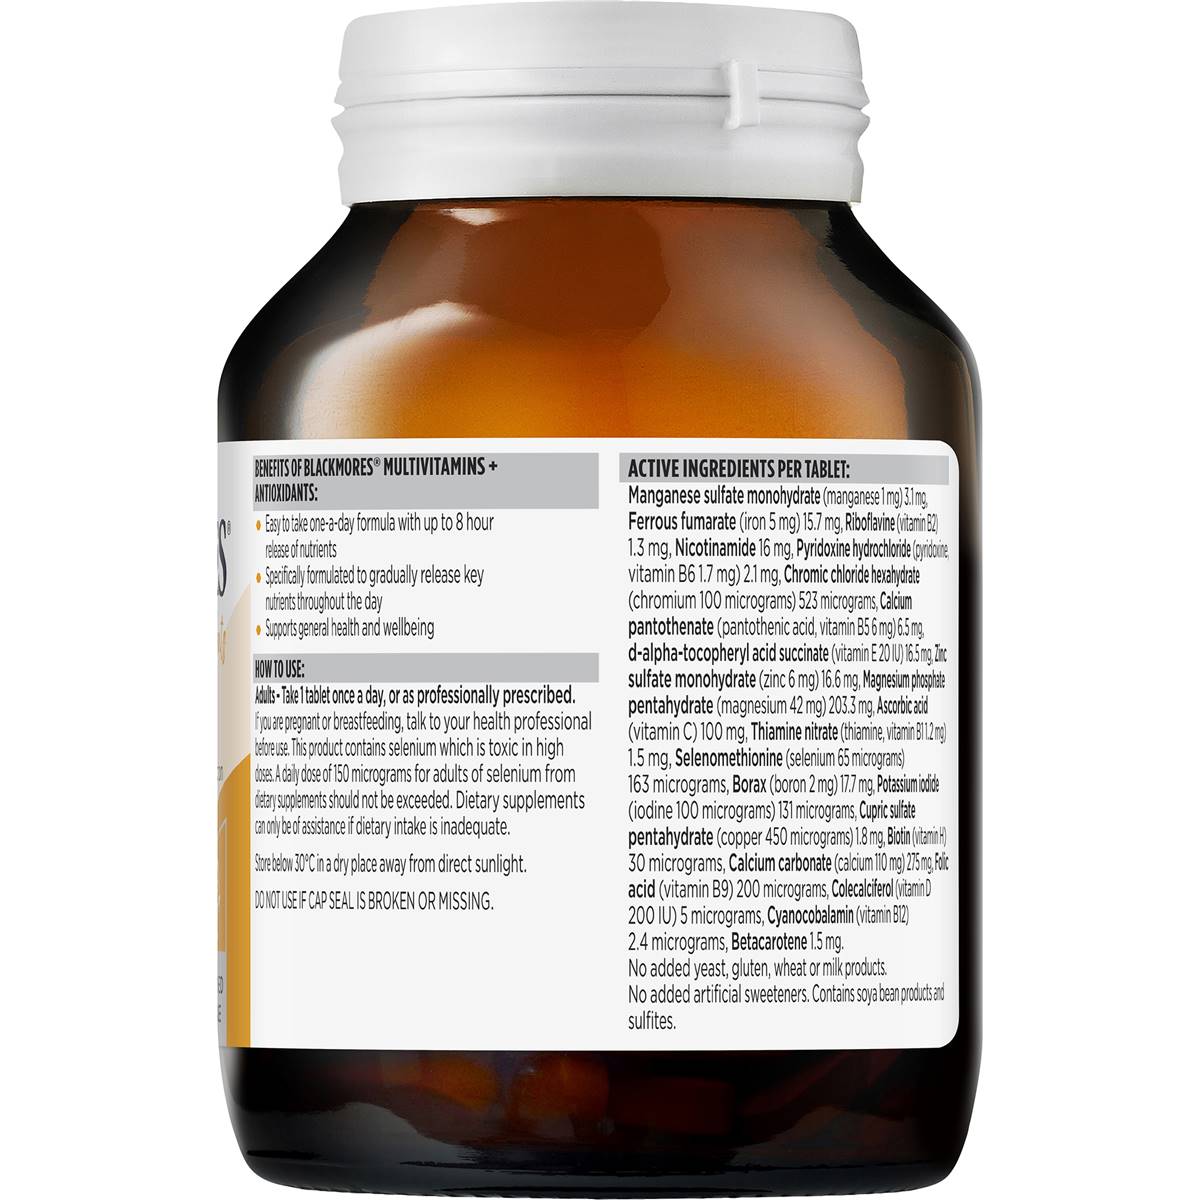 Blackmores Multivitamins Antioxidants 4